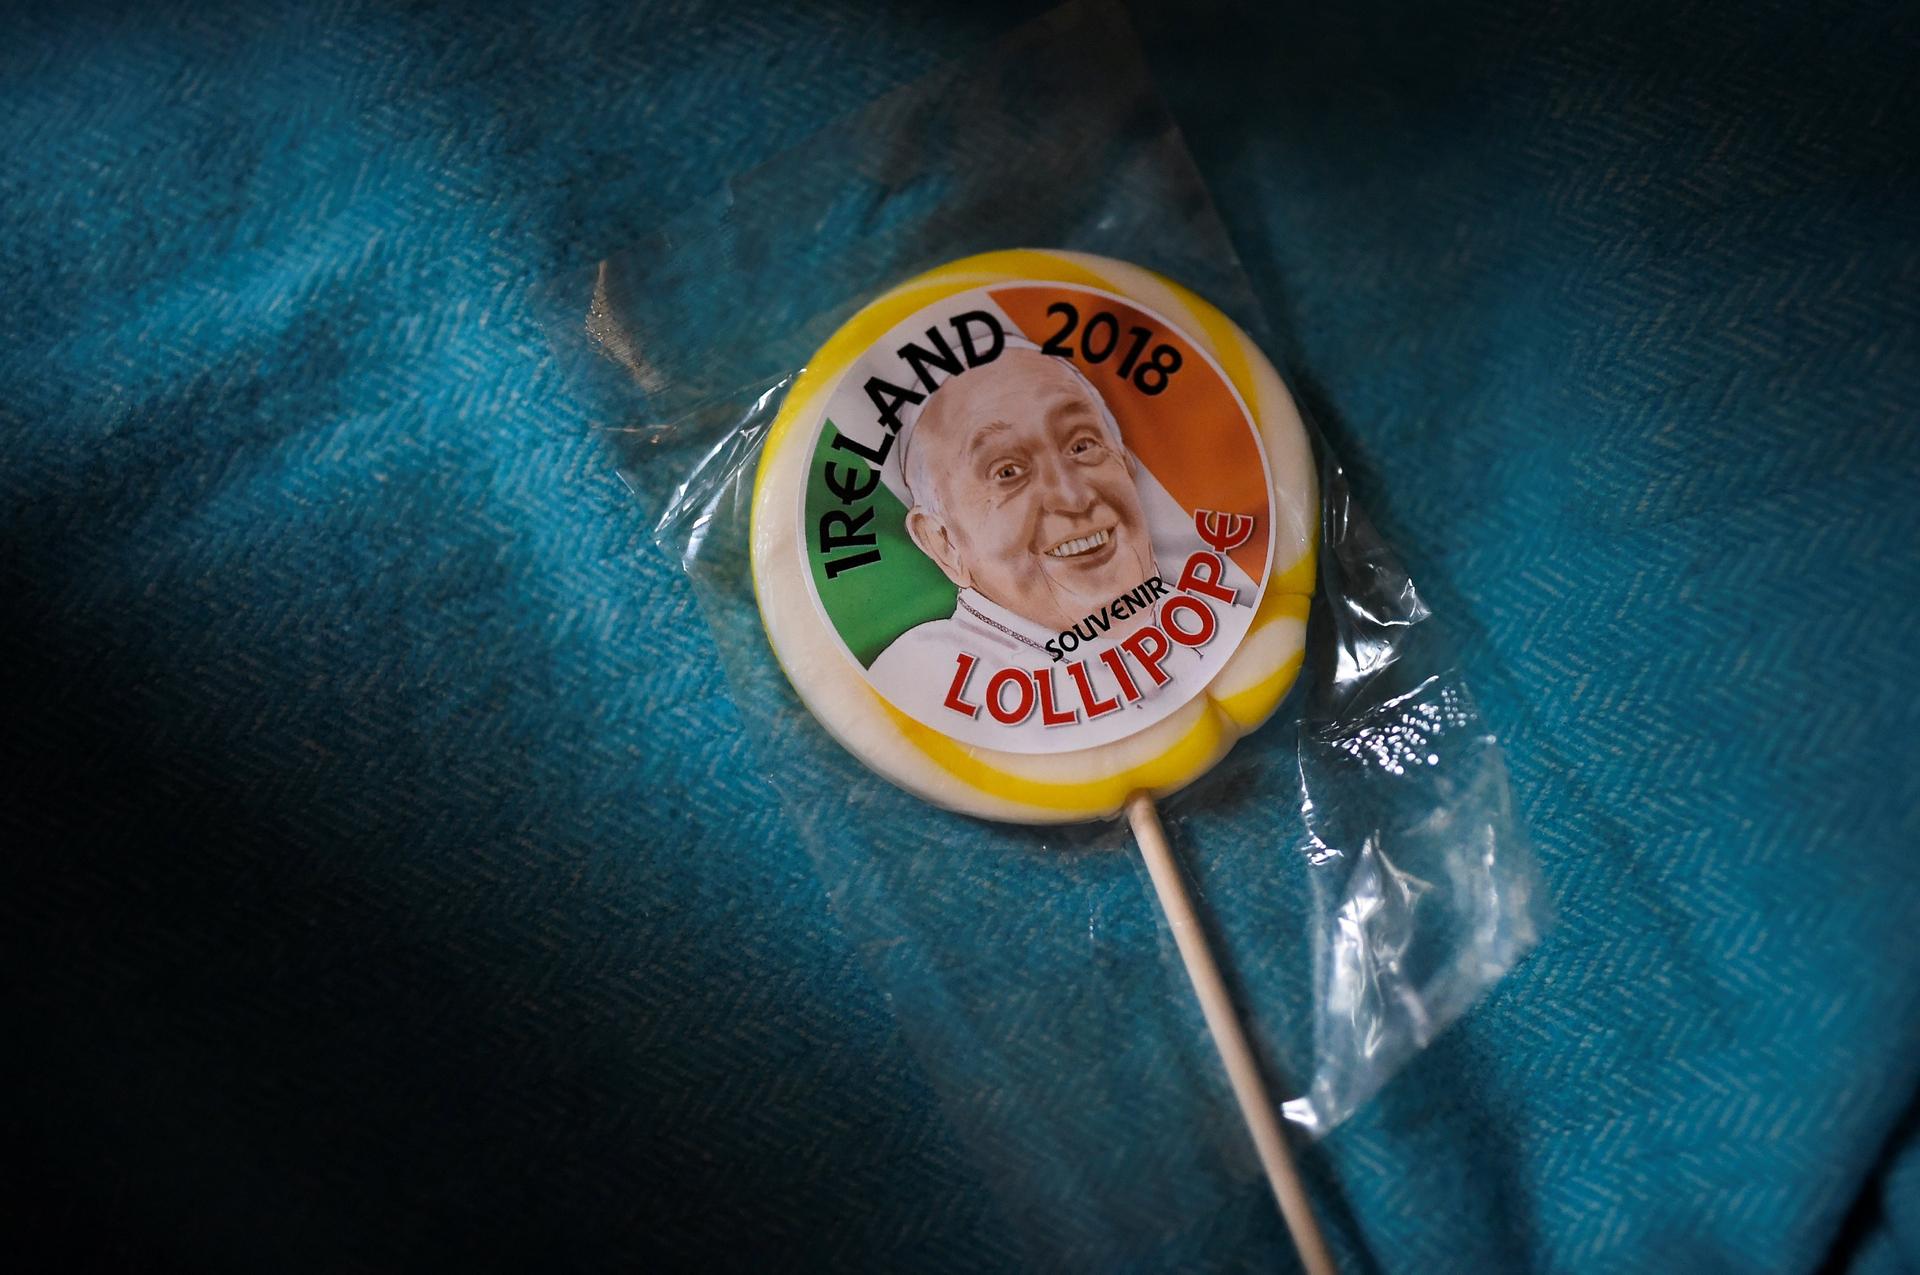 A souvenir lollipop called a 